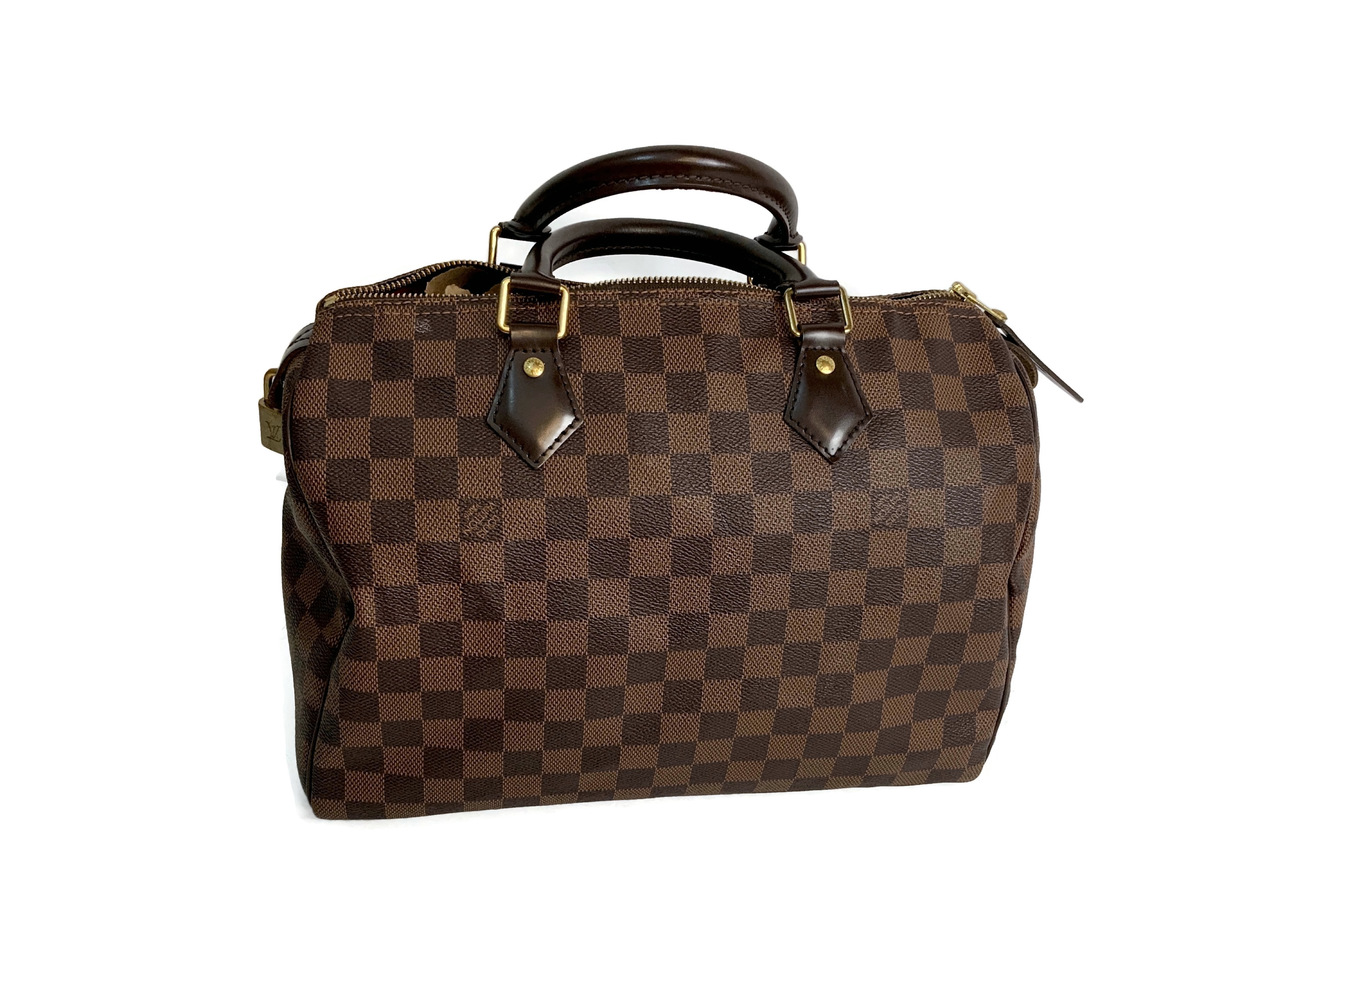 Authentic Louis Vuitton Speedy 30 Bag Damier - Ebene - Luxury Handbag | USA Pawn